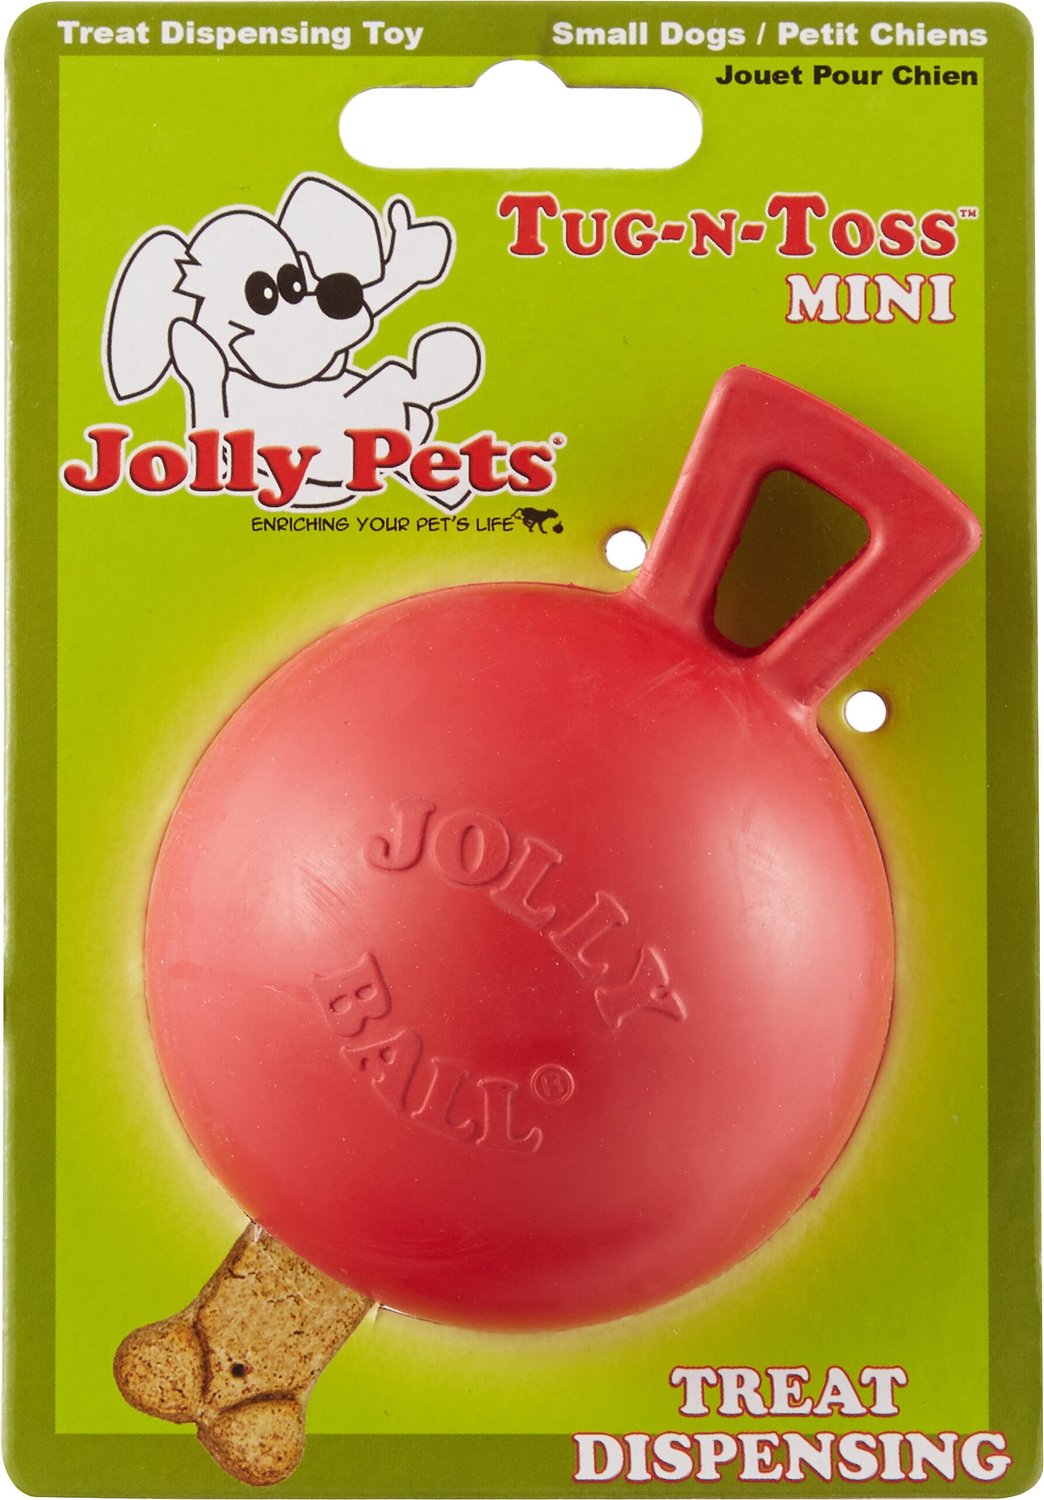 the jolly ball